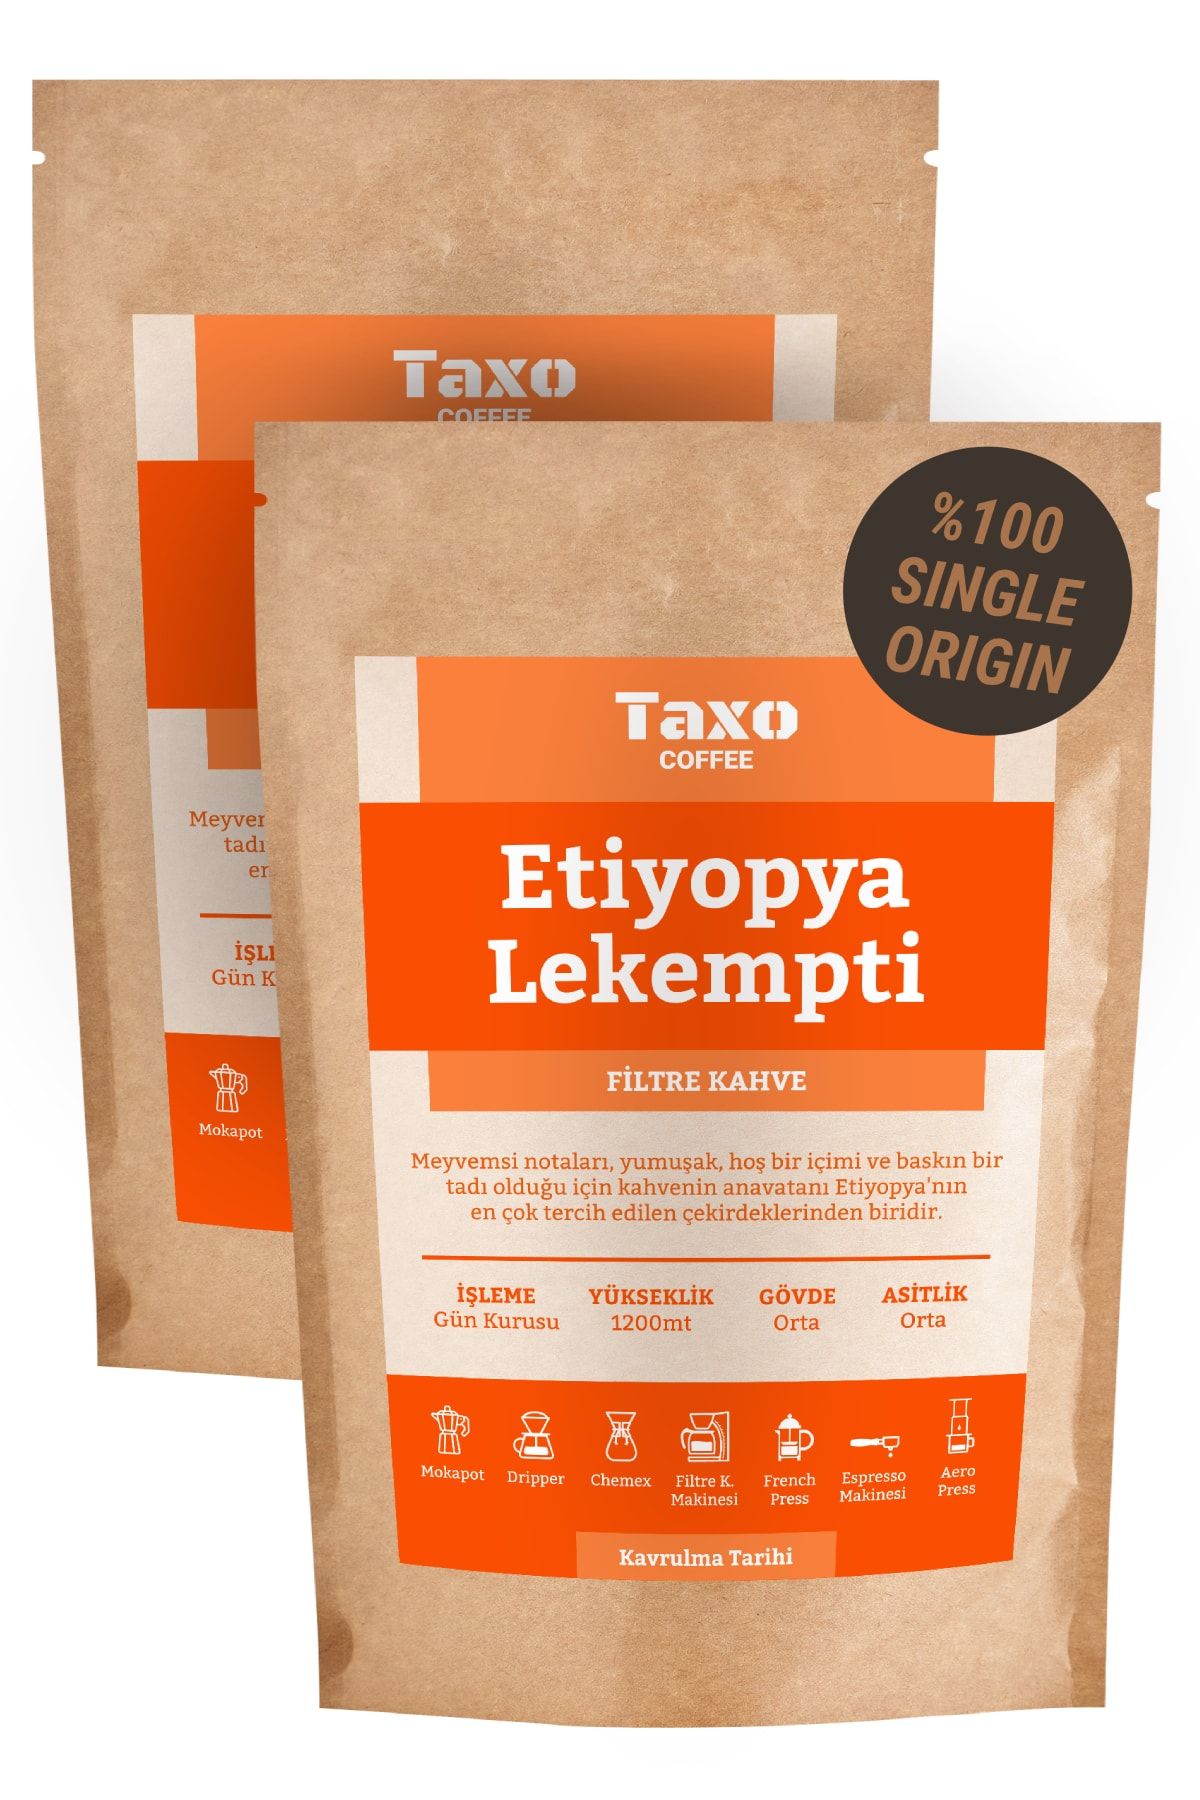 Taxo Coffee Etiyopya Lekempti 1kg Filtre Kahve